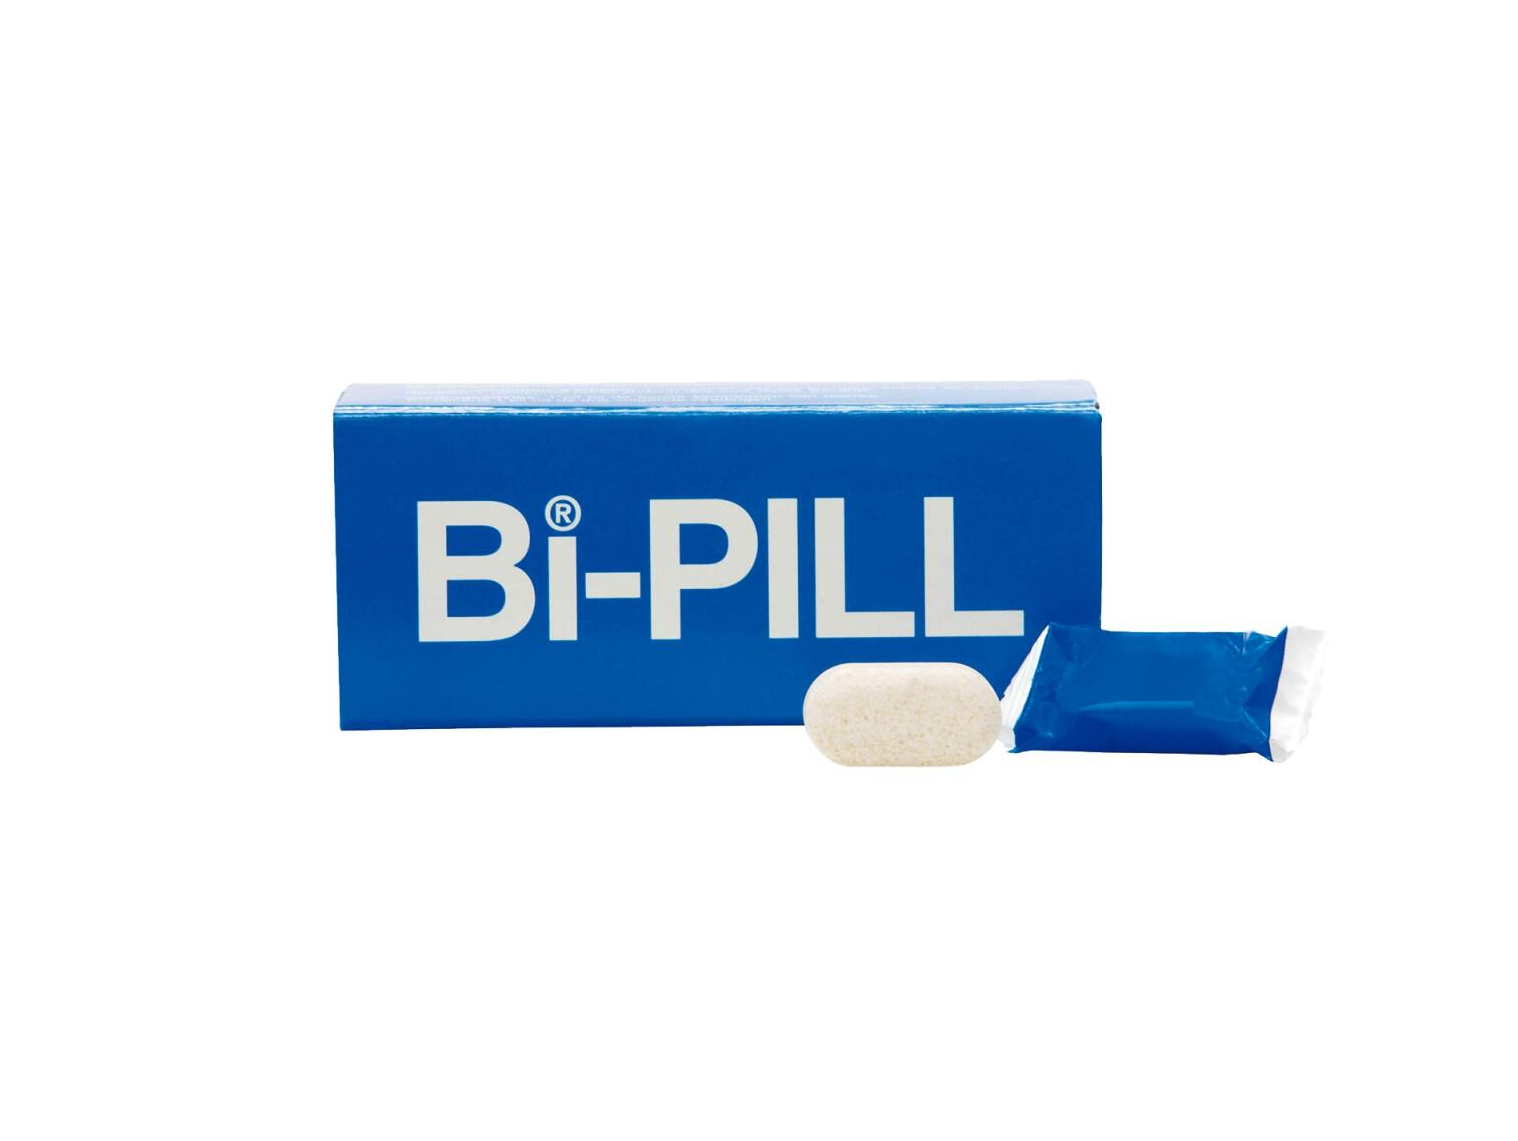 Bi-Pill, Bicarbonat-Pille, Kälber saufen, Kälberdurchfall